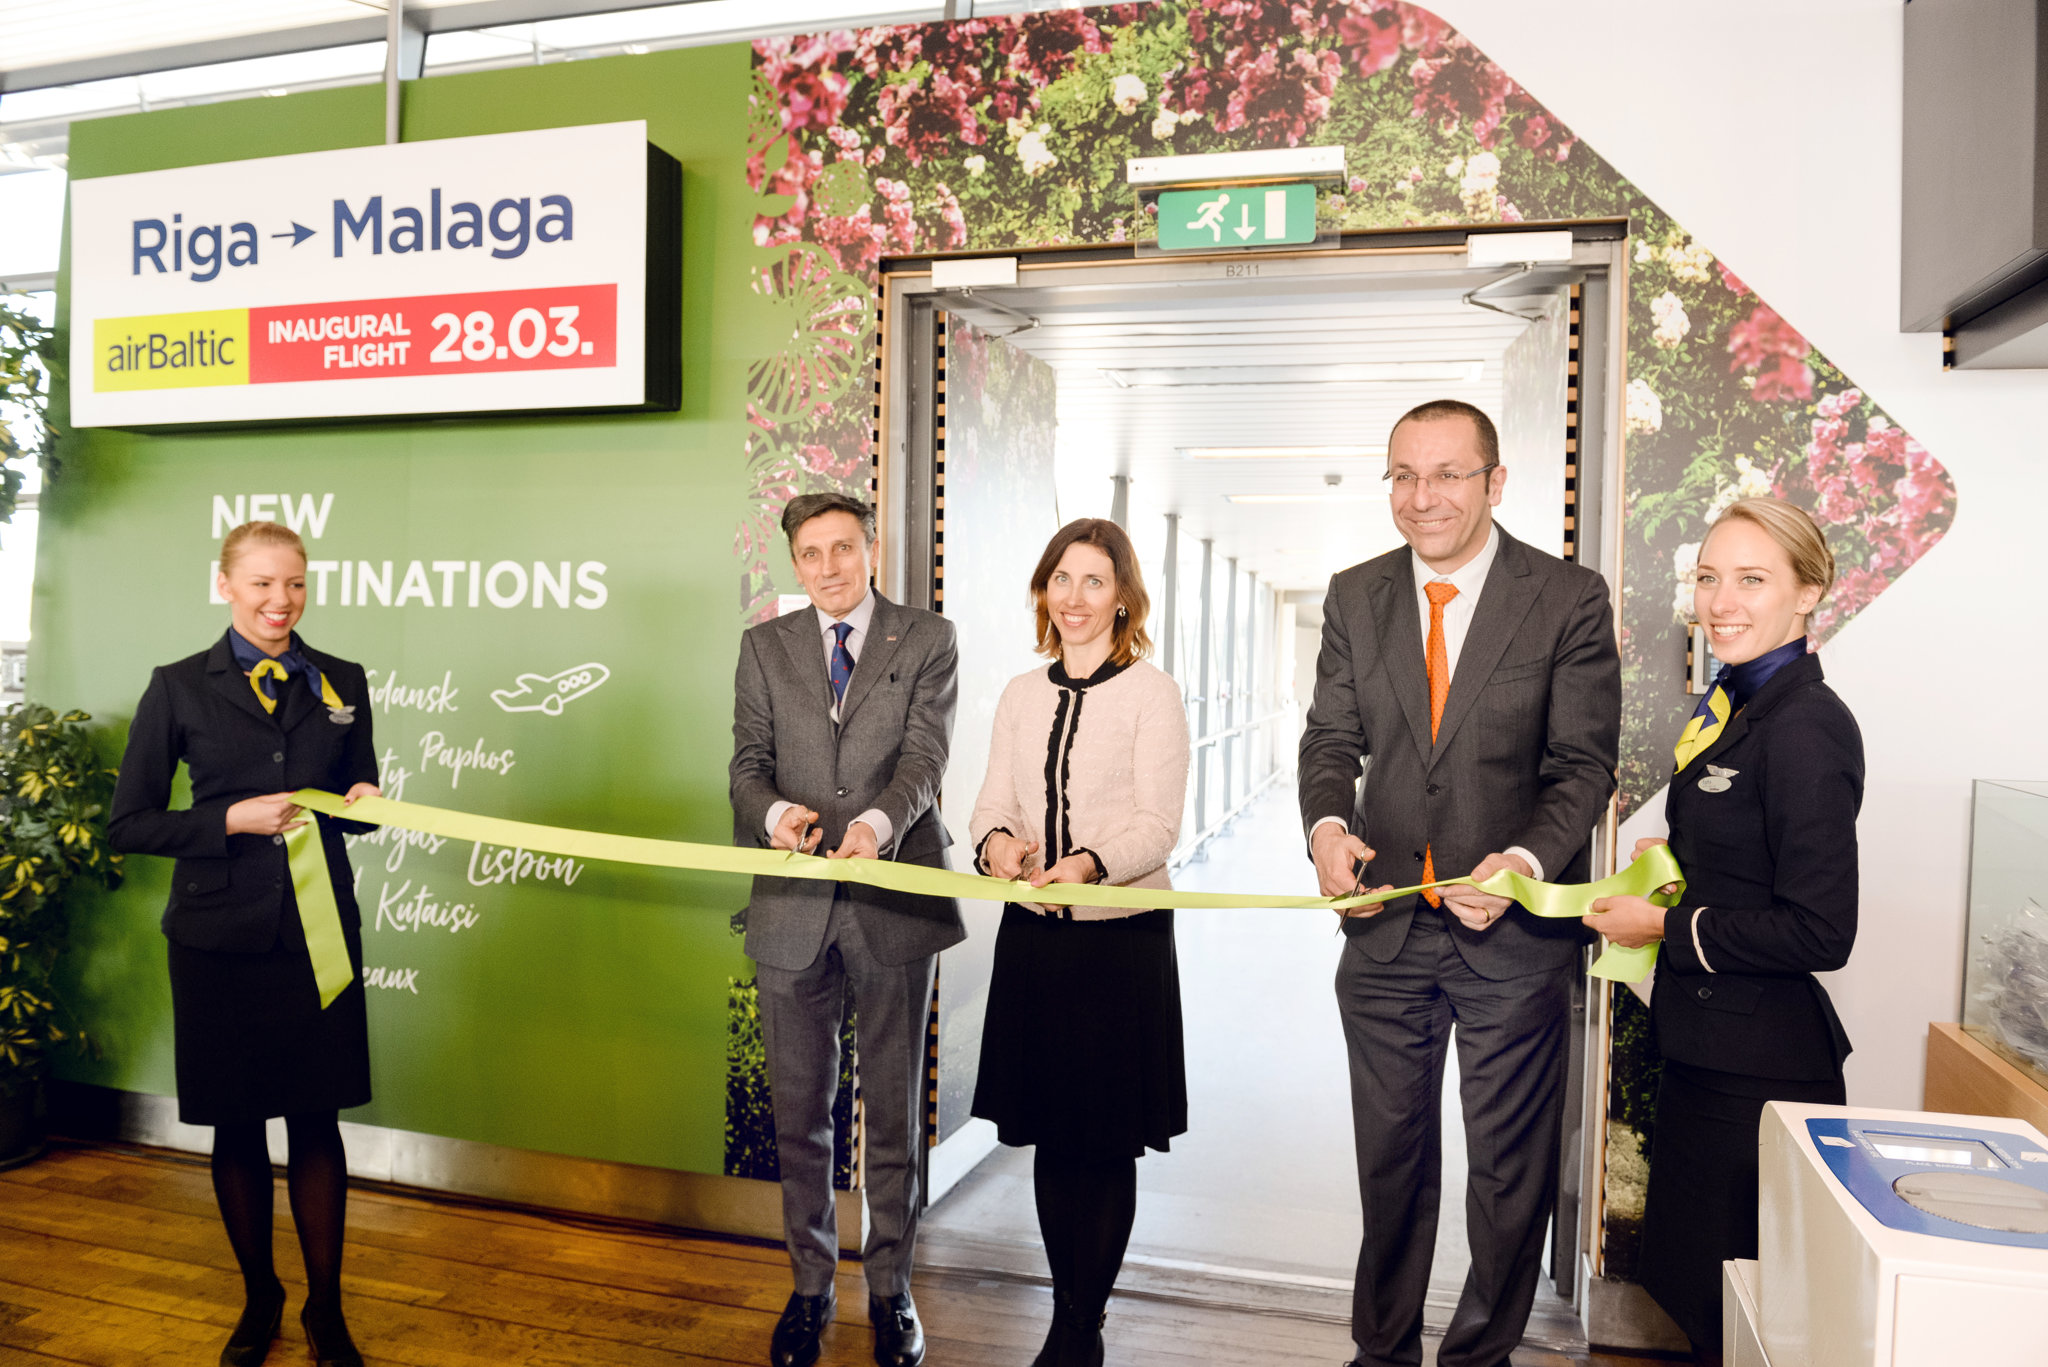 airBaltic launches flights between Riga and Malaga